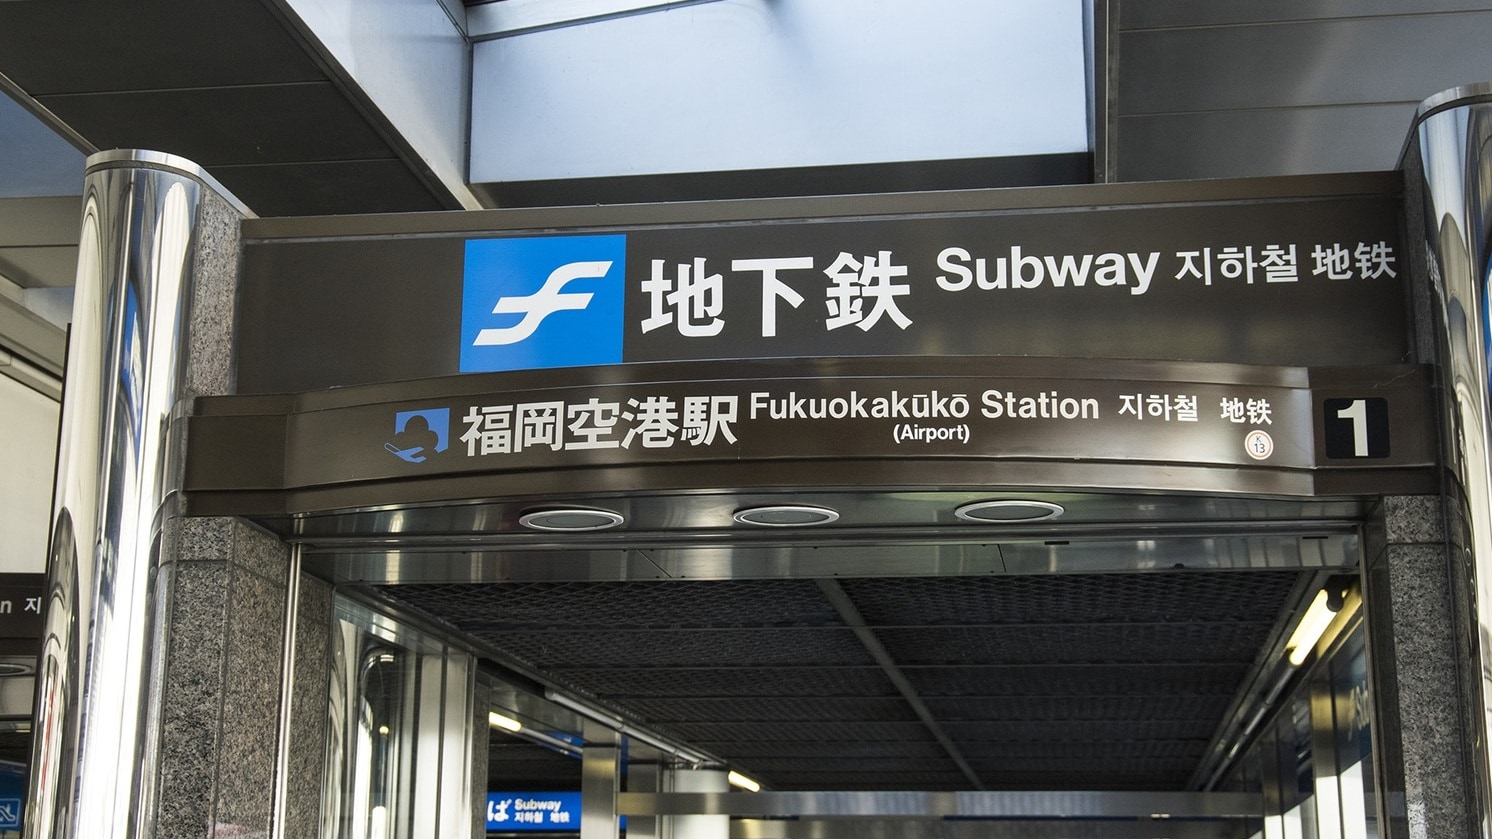 Fukuoka Airport/Subway Entrance